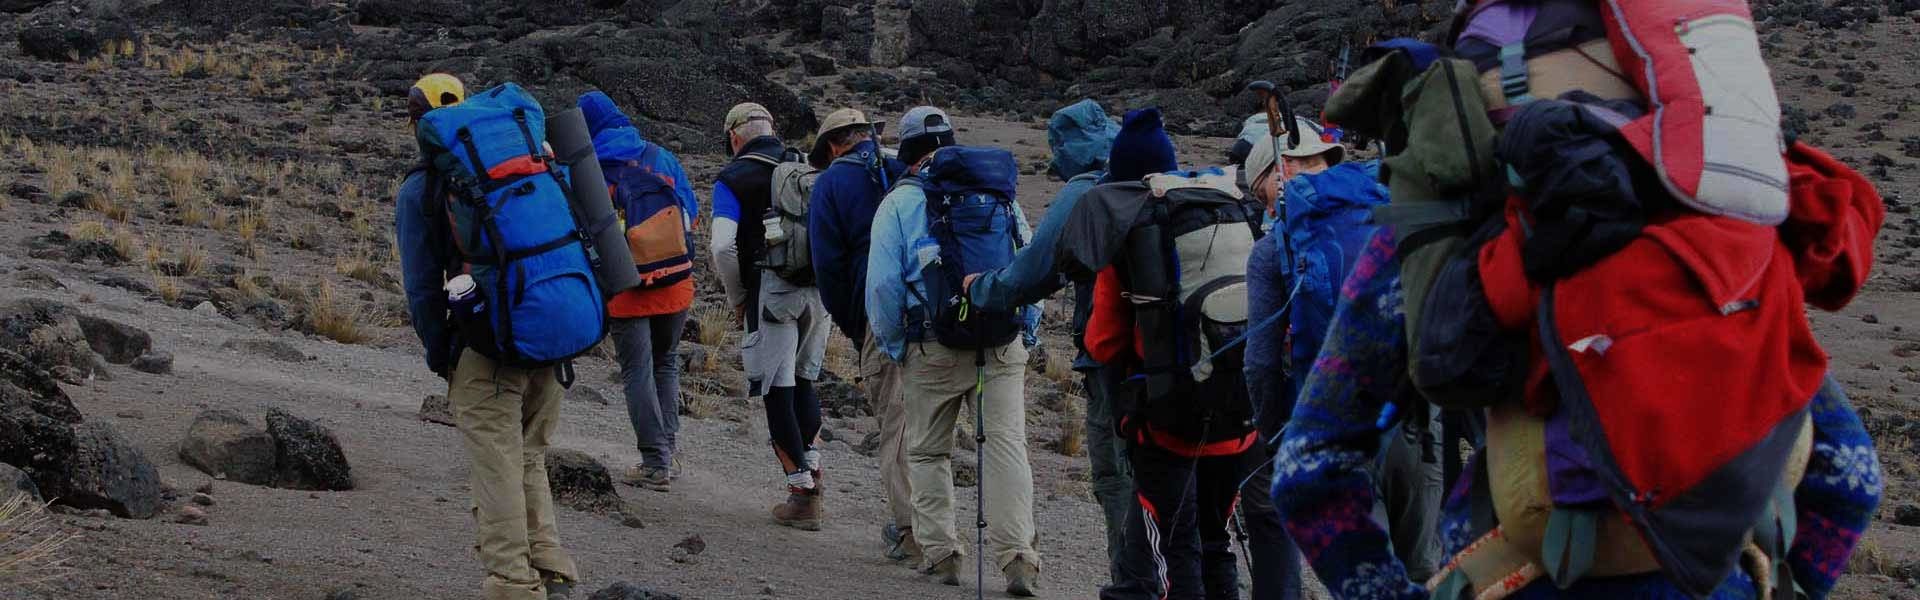 Kilimanjaro Equipment List